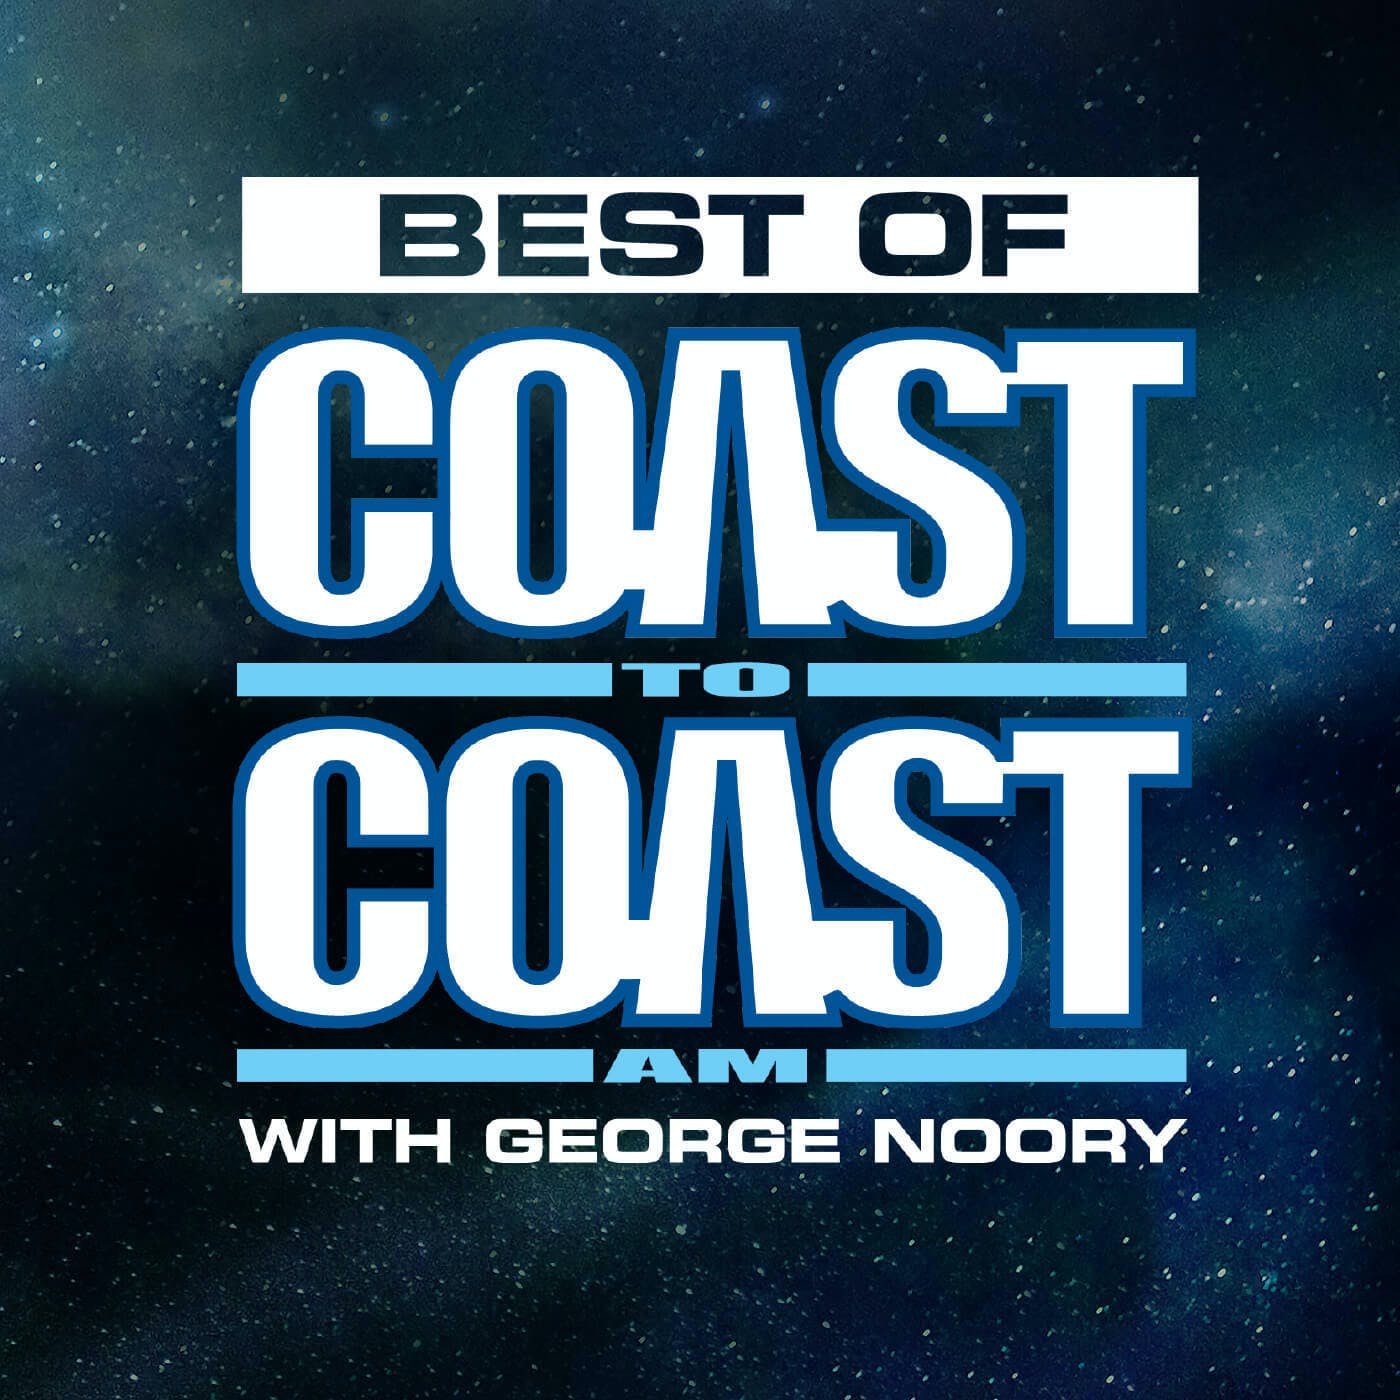 Oprah 2020? - Best of Coast to Coast AM - 1/8/18